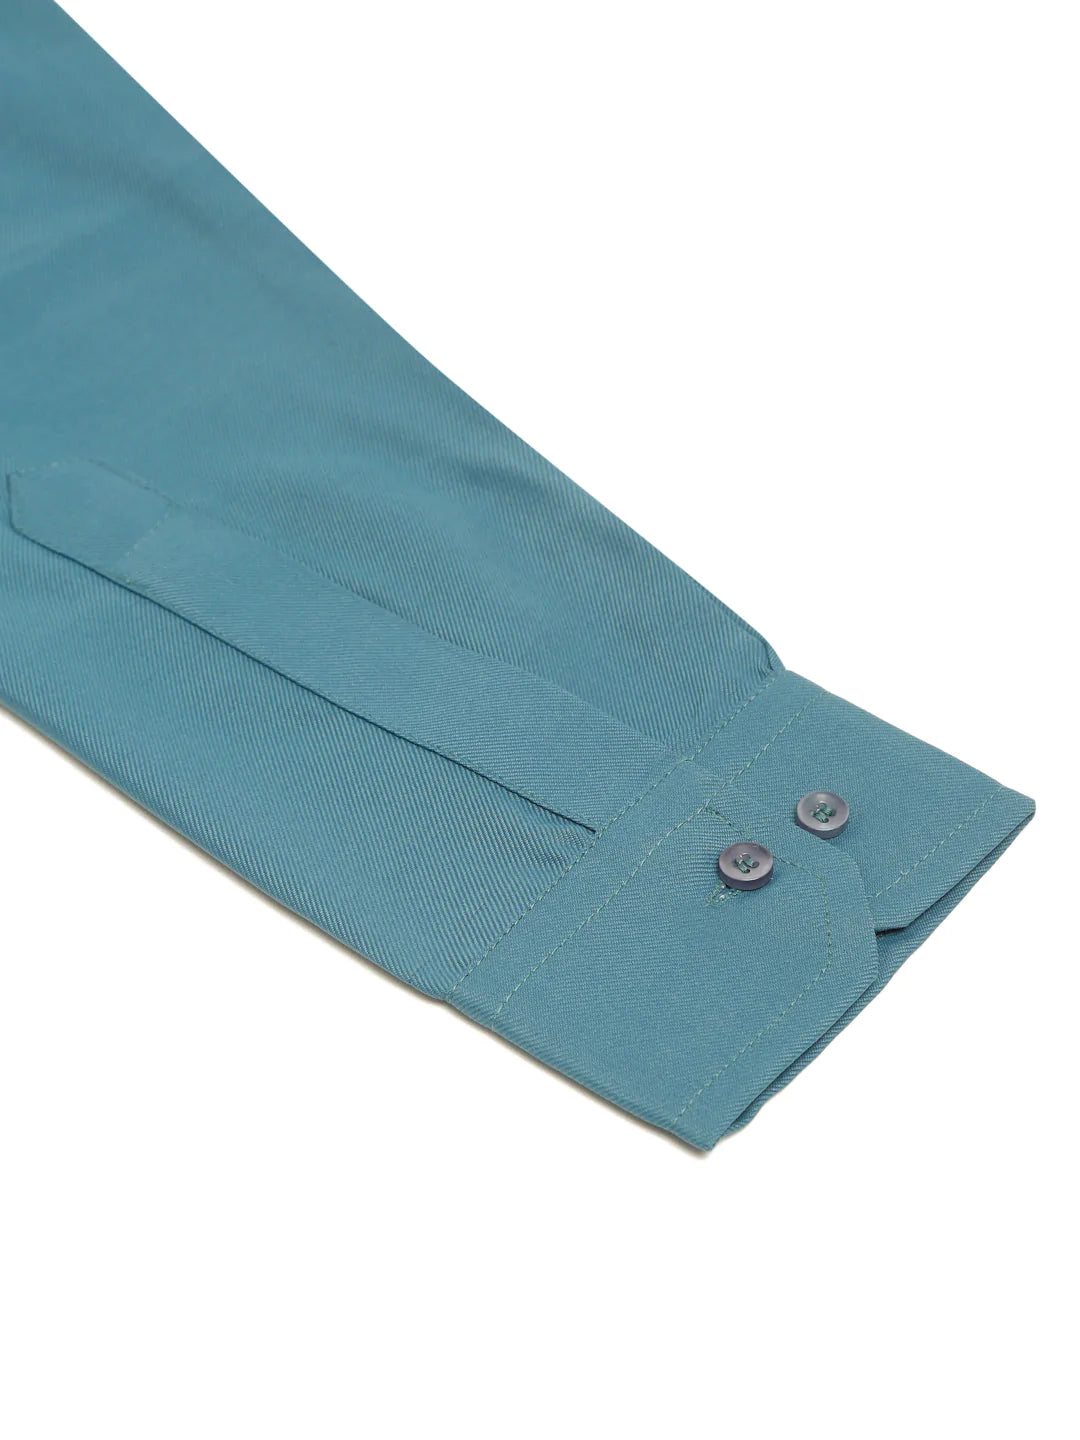 Jompers Men's Teal Blue Solid Cotton Short Kurta ( KO 677 Teal )